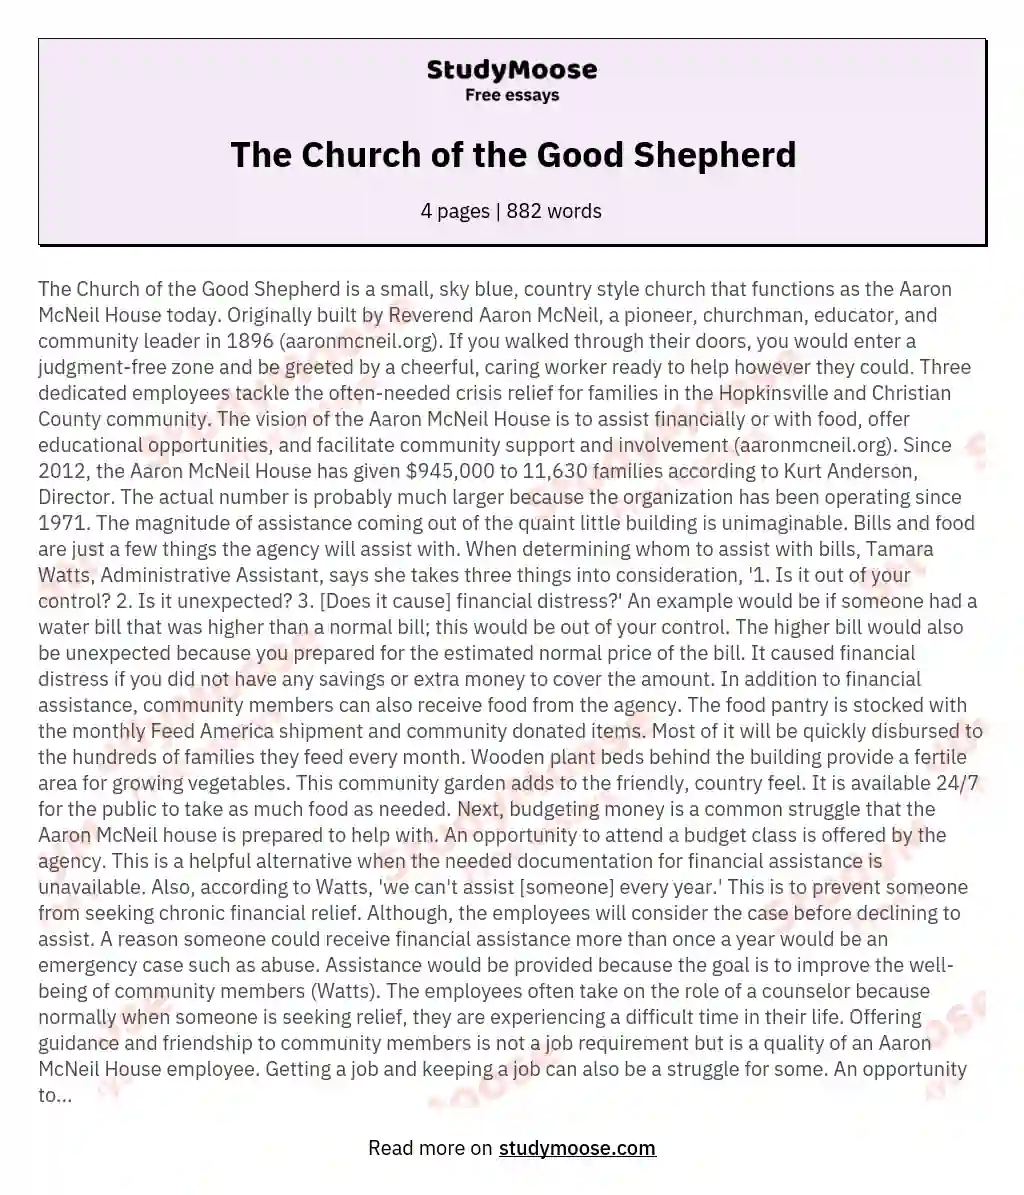 The Church of the Good Shepherd essay